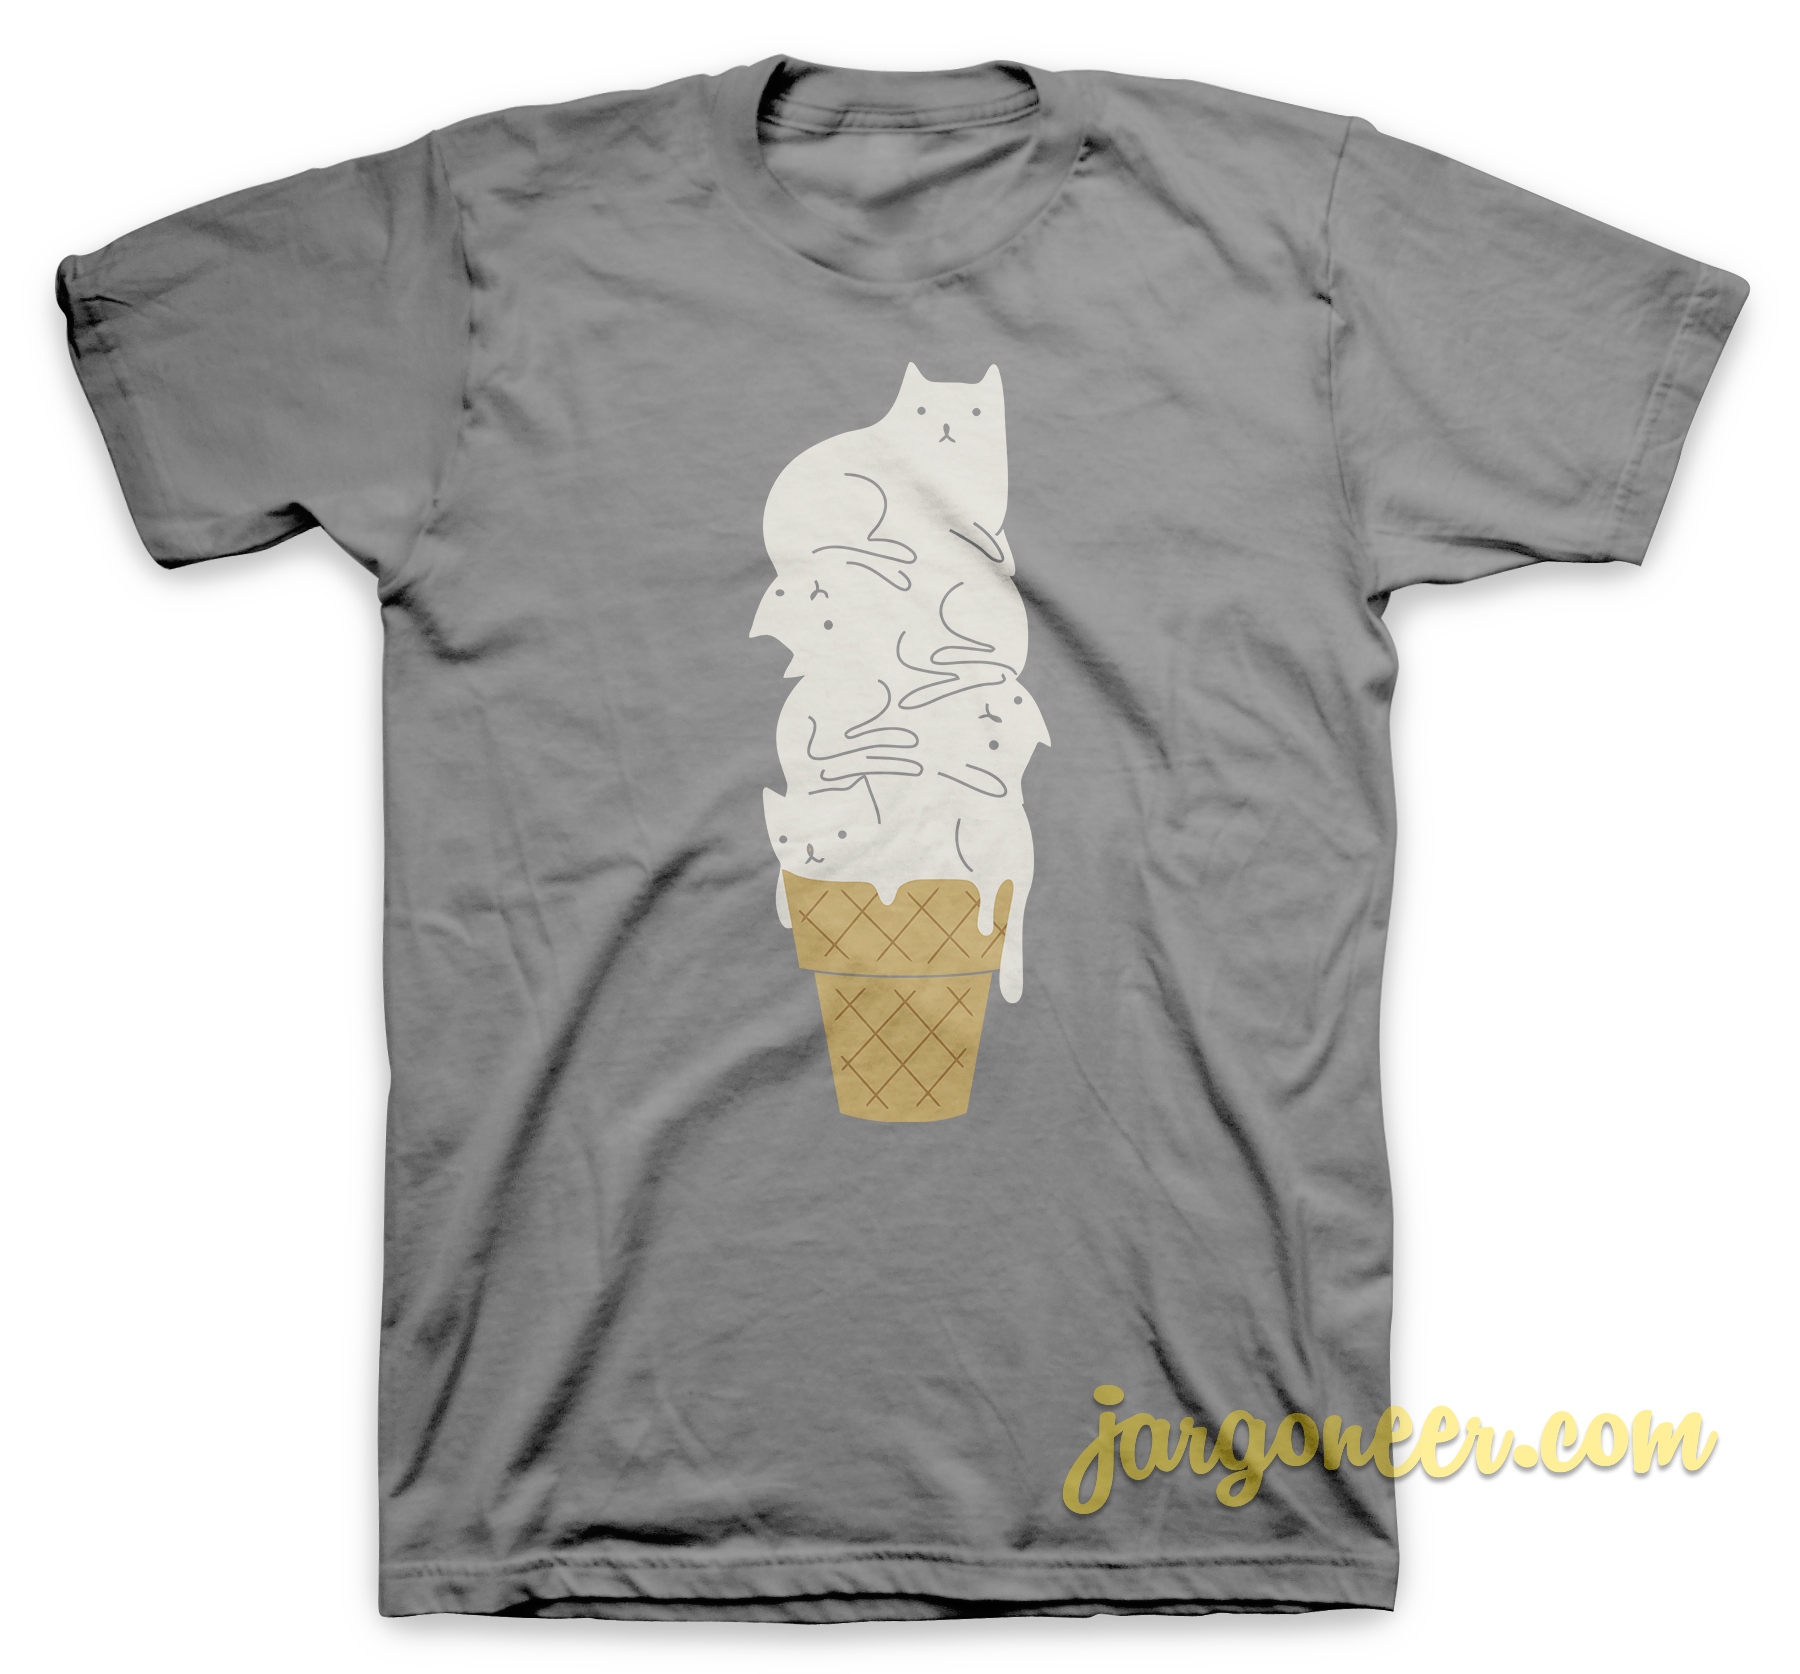 Meowlting Gray T Shirt - Shop Unique Graphic Cool Shirt Designs